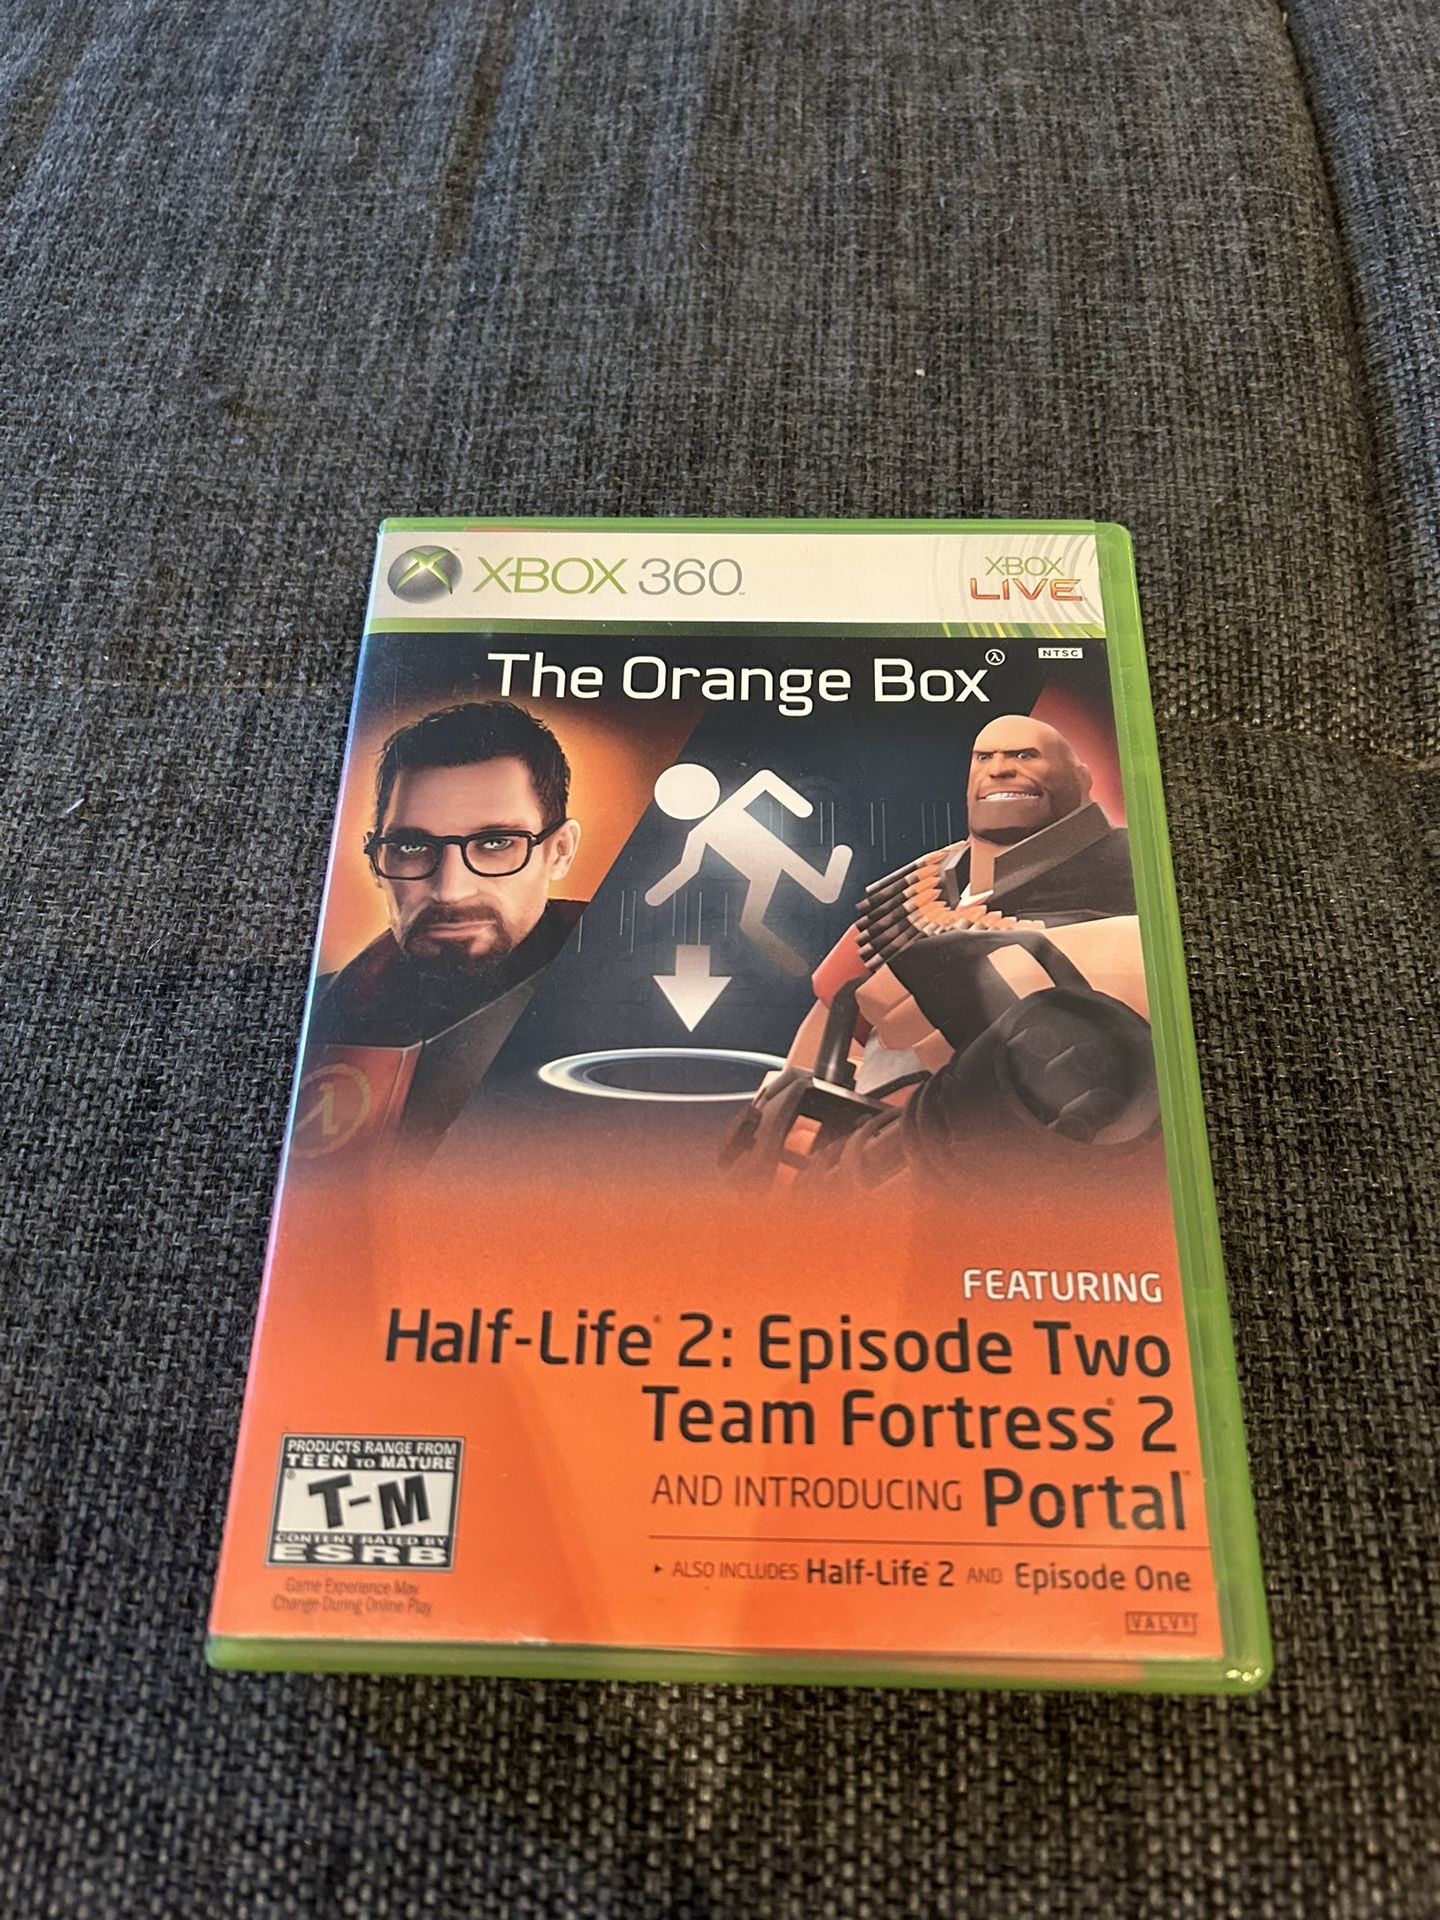 The Orange Box Xbox 360 - Complete CIB With Manuel, Great Condition!